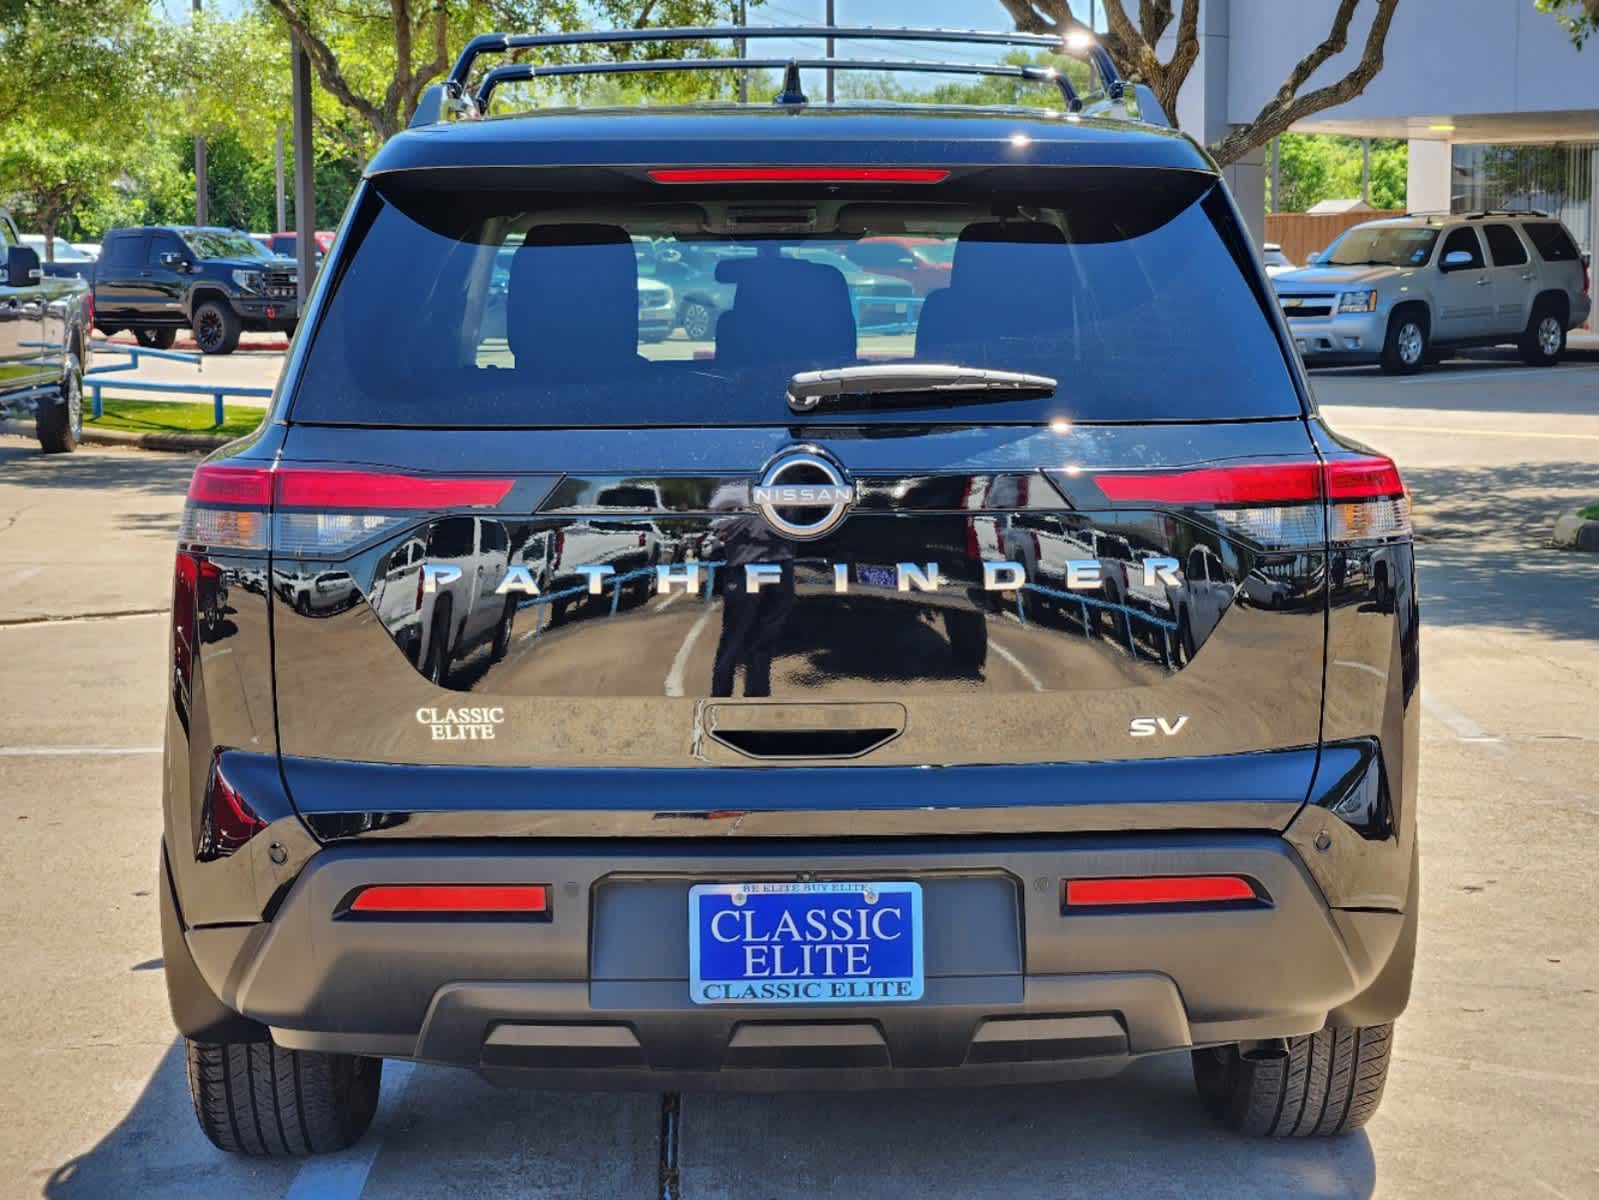 2022 Nissan Pathfinder SV 6